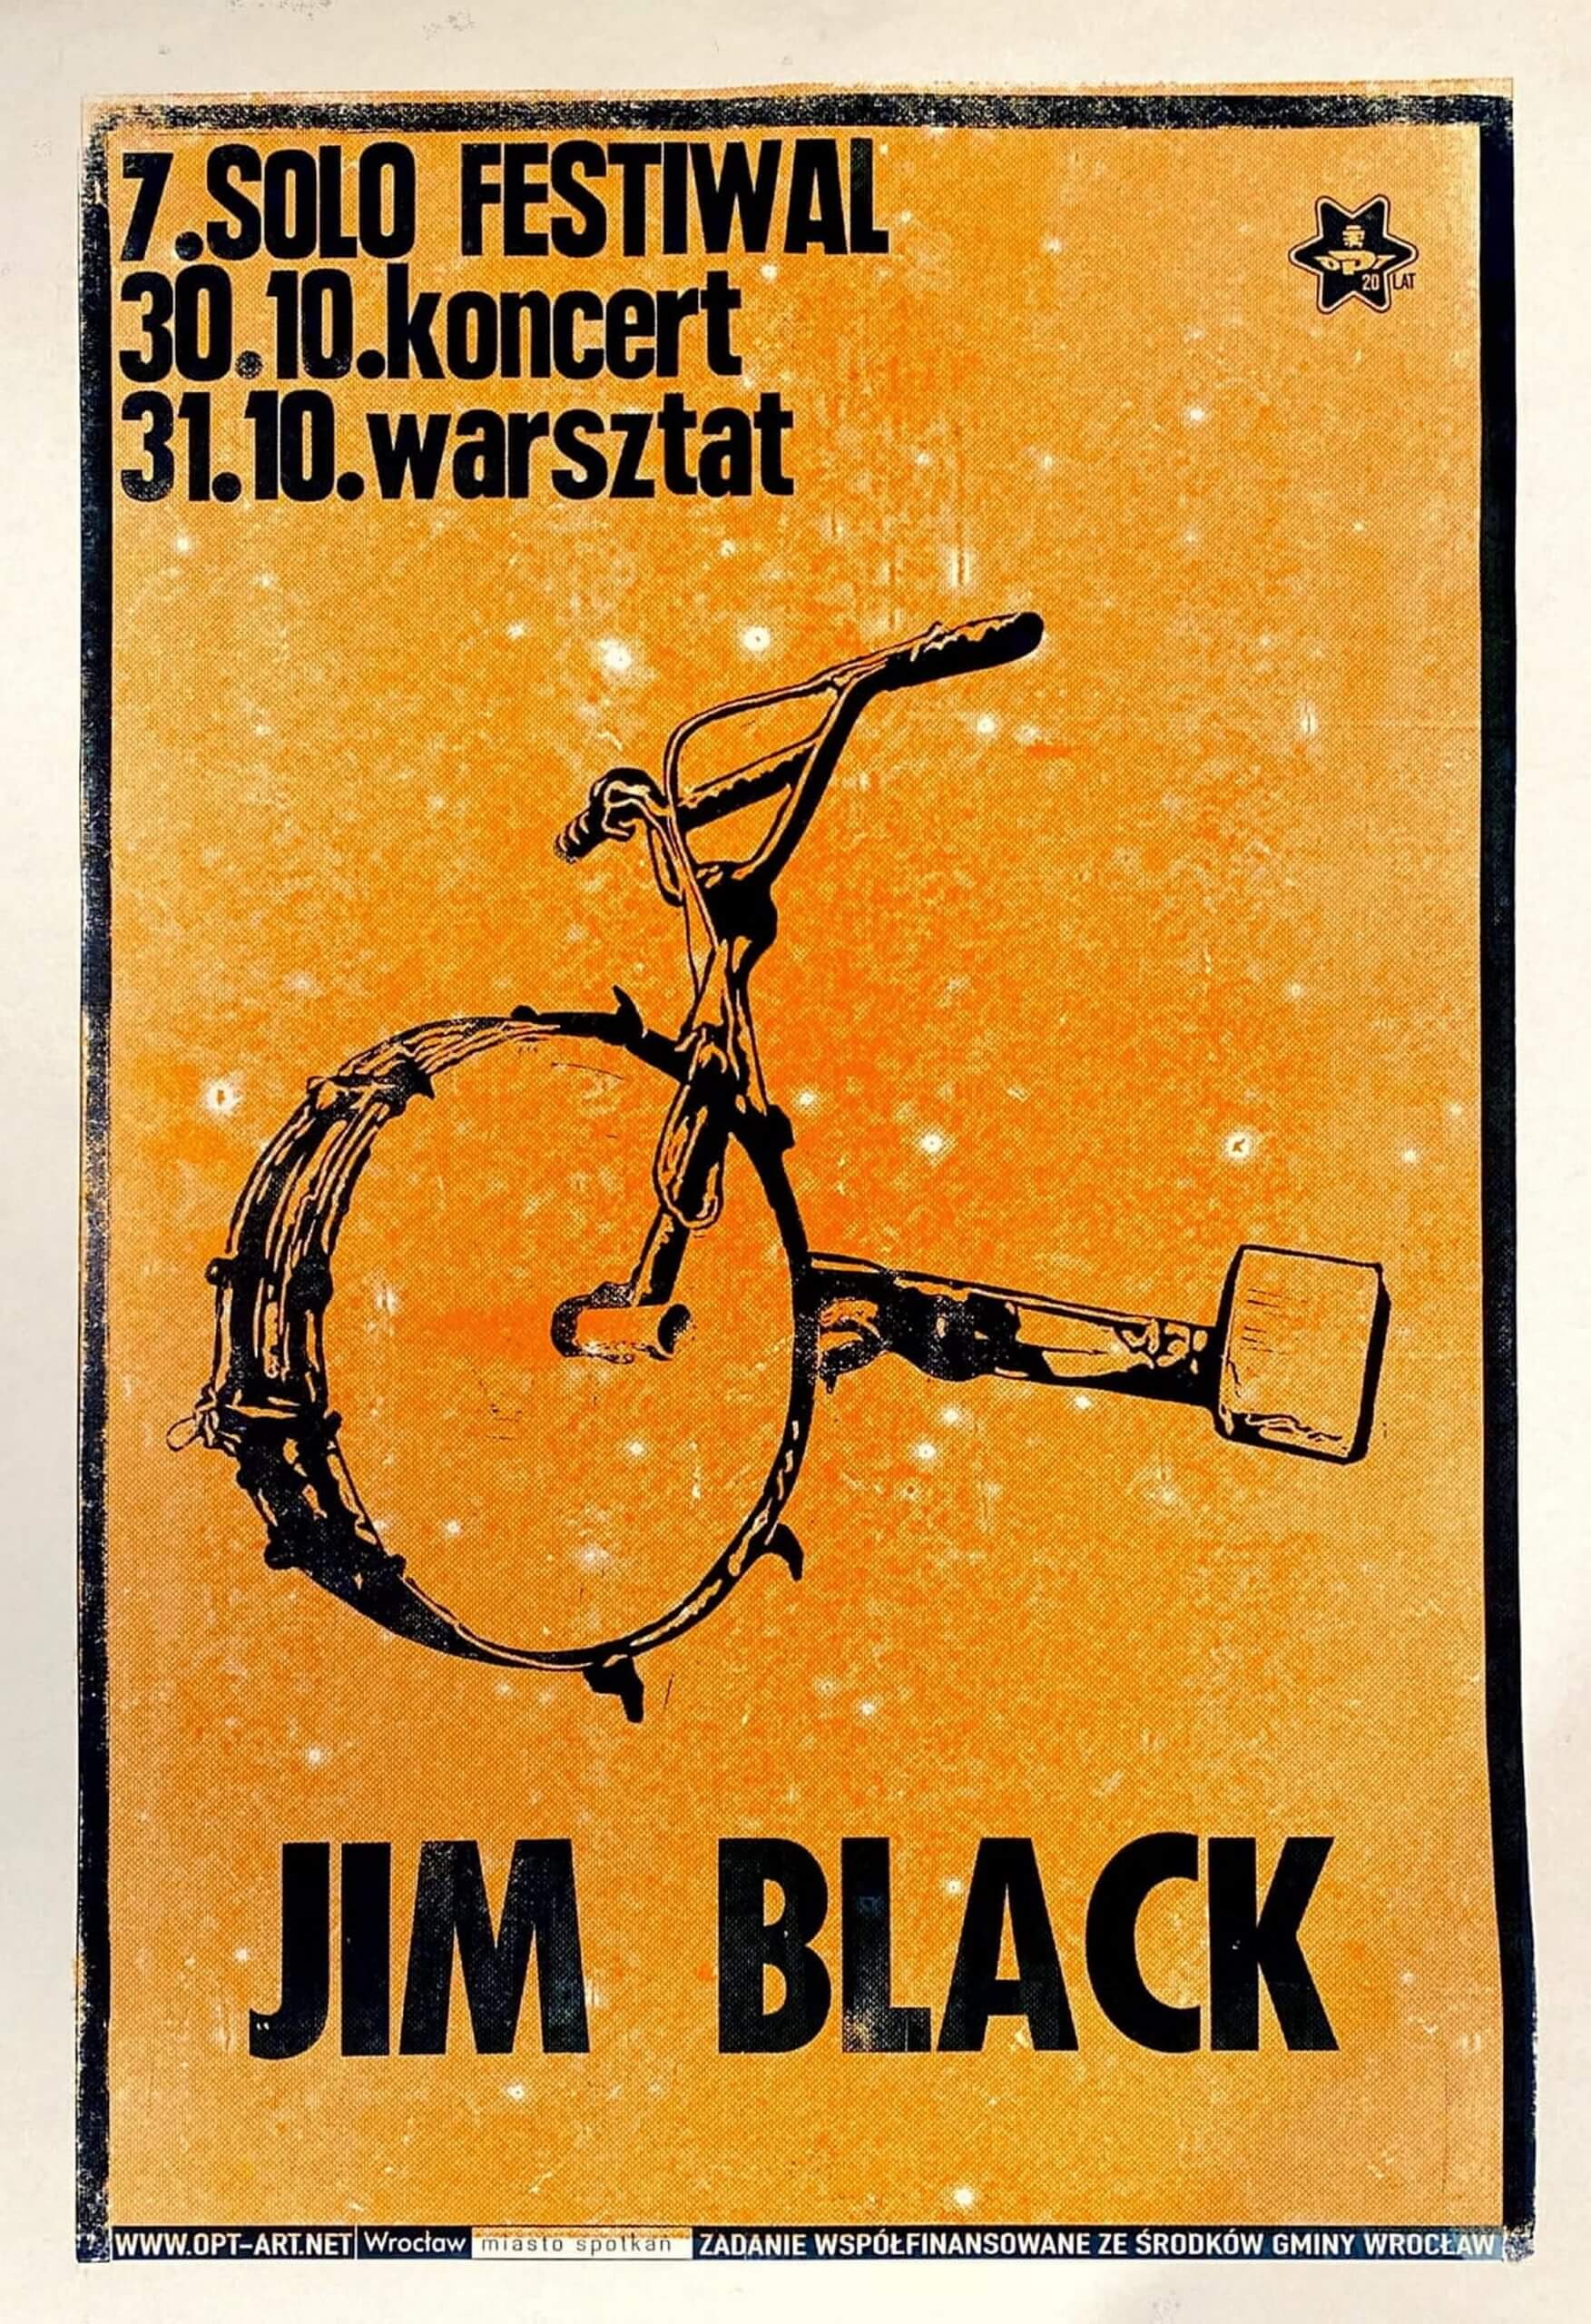 Jim Black